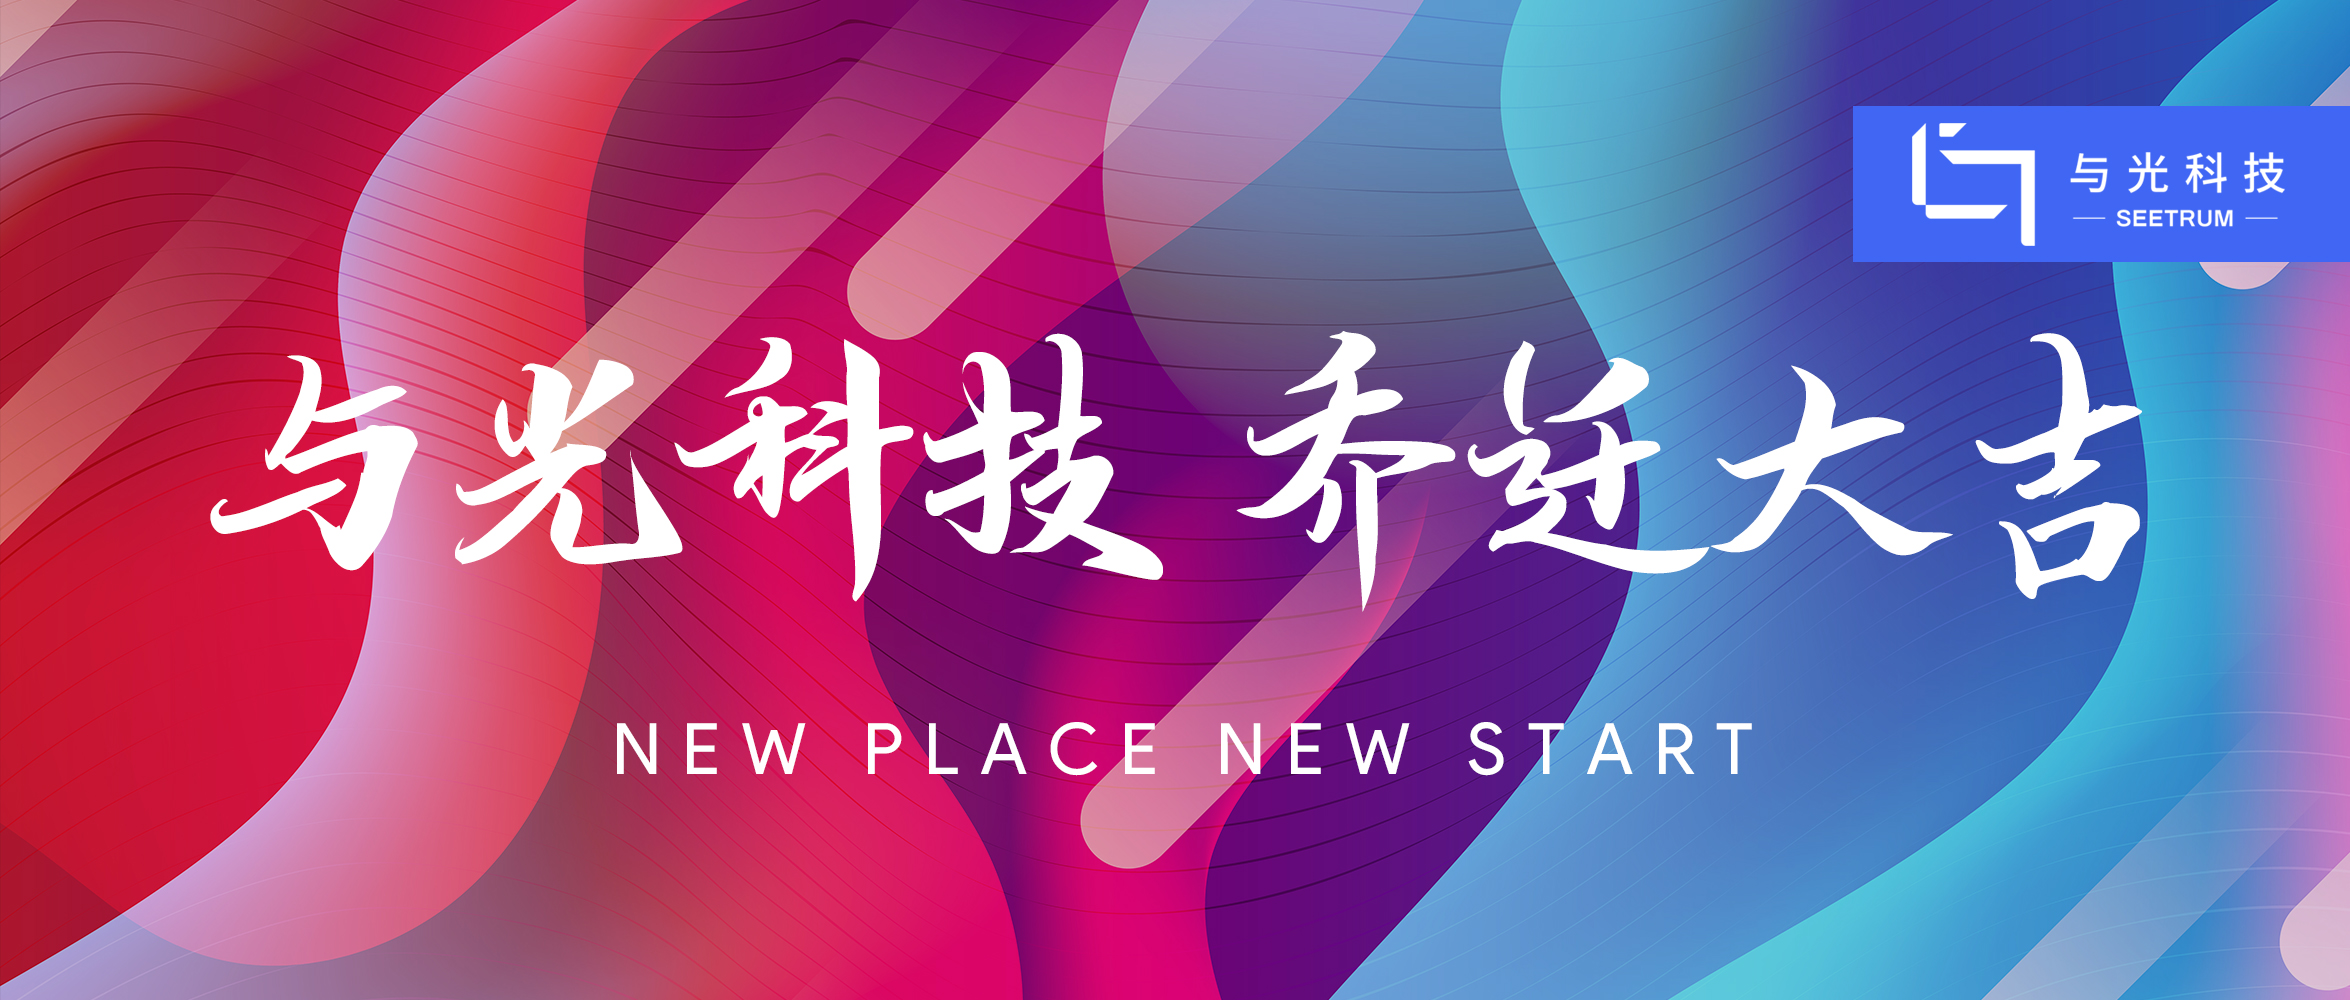 NEW PLACE NEW START | 大阳城集团娱乐43335（中国）有限公司搬家啦